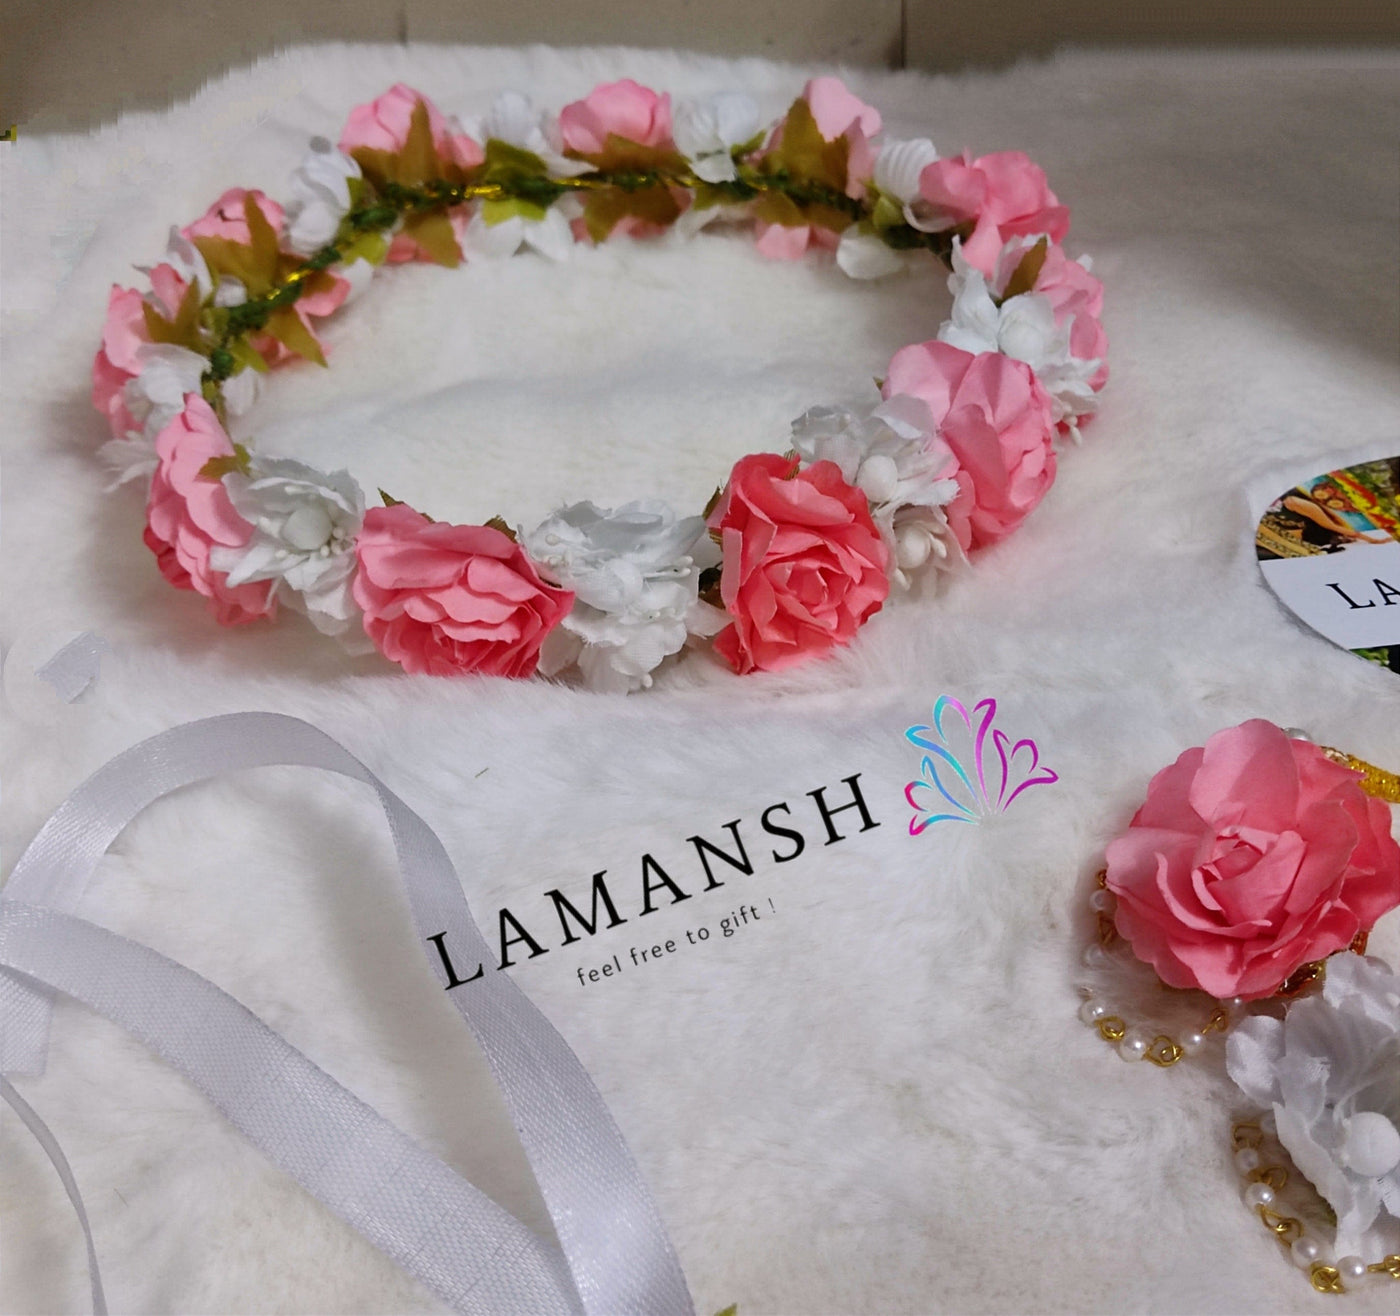 LAMANSH celebrity flower jewellery LAMANSH® Bridal Royal Ethnic Floral Jewellery set for Haldi & Mehendi ceremony❤️